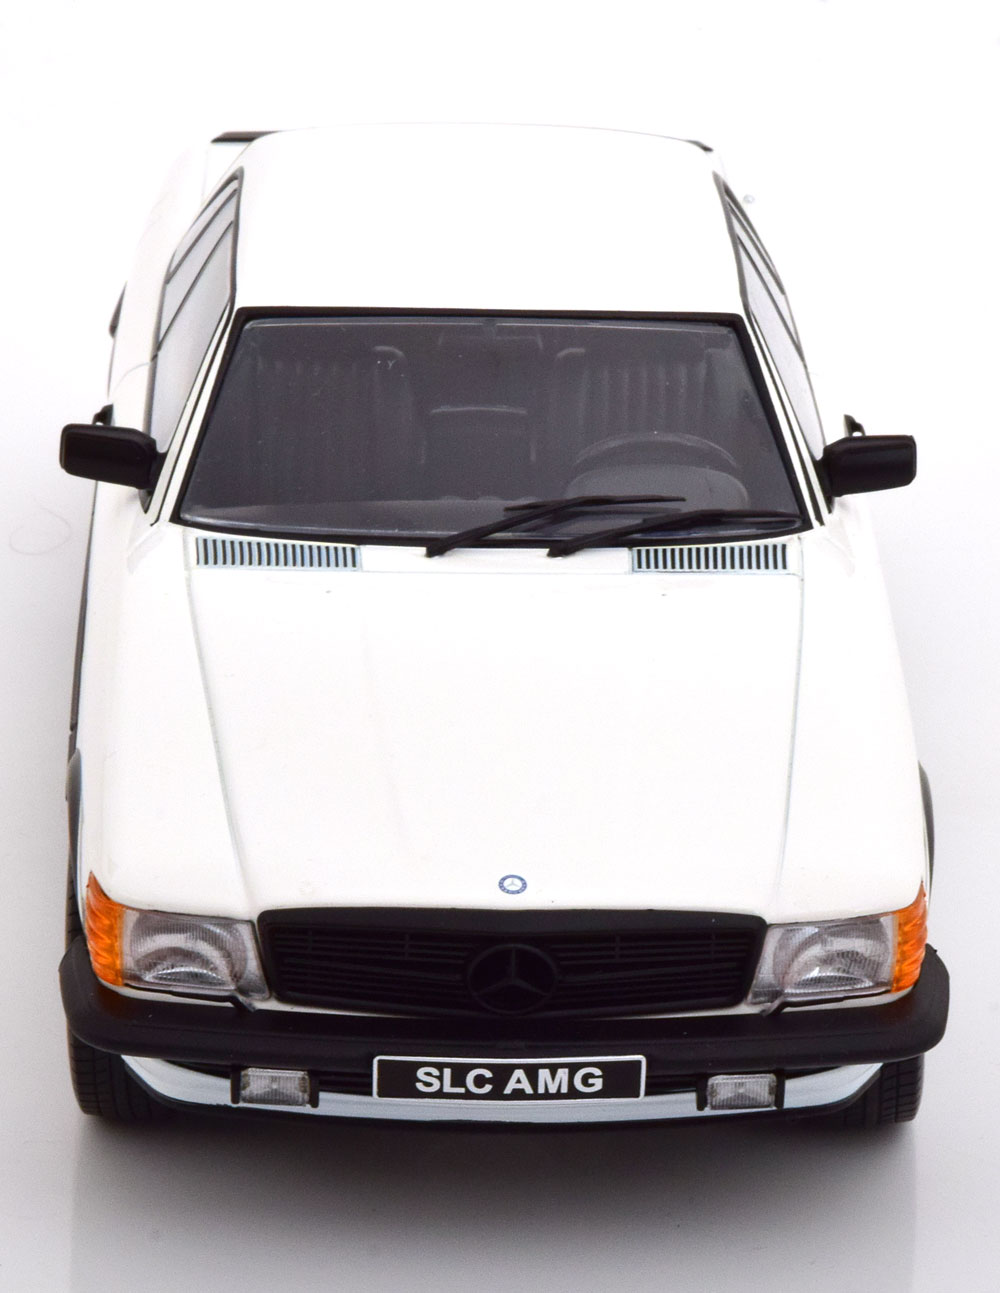 Mercedes-Benz 500 SLC 6.0 (C107) AMG 1985 Wit 1-18 KK-Scale (Metaal)